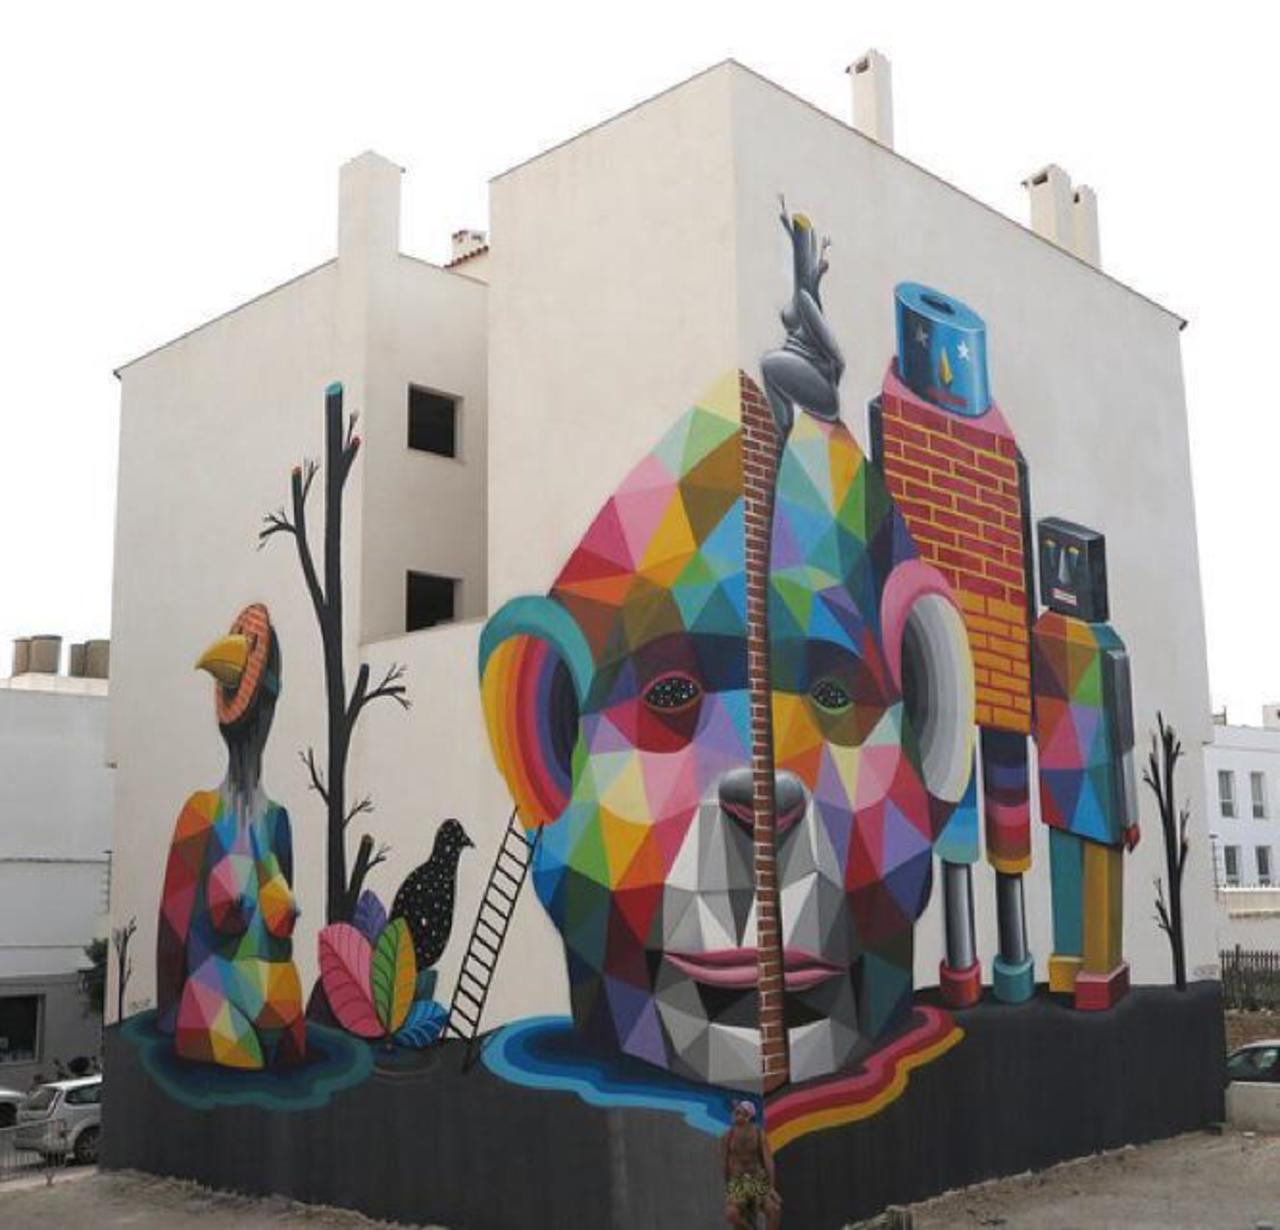 RT @richardbanfa: #streetart by @OKUDART @BloopFestival #switch #graffiti #bedifferent #art #arte http://t.co/zaeimyzBLQ